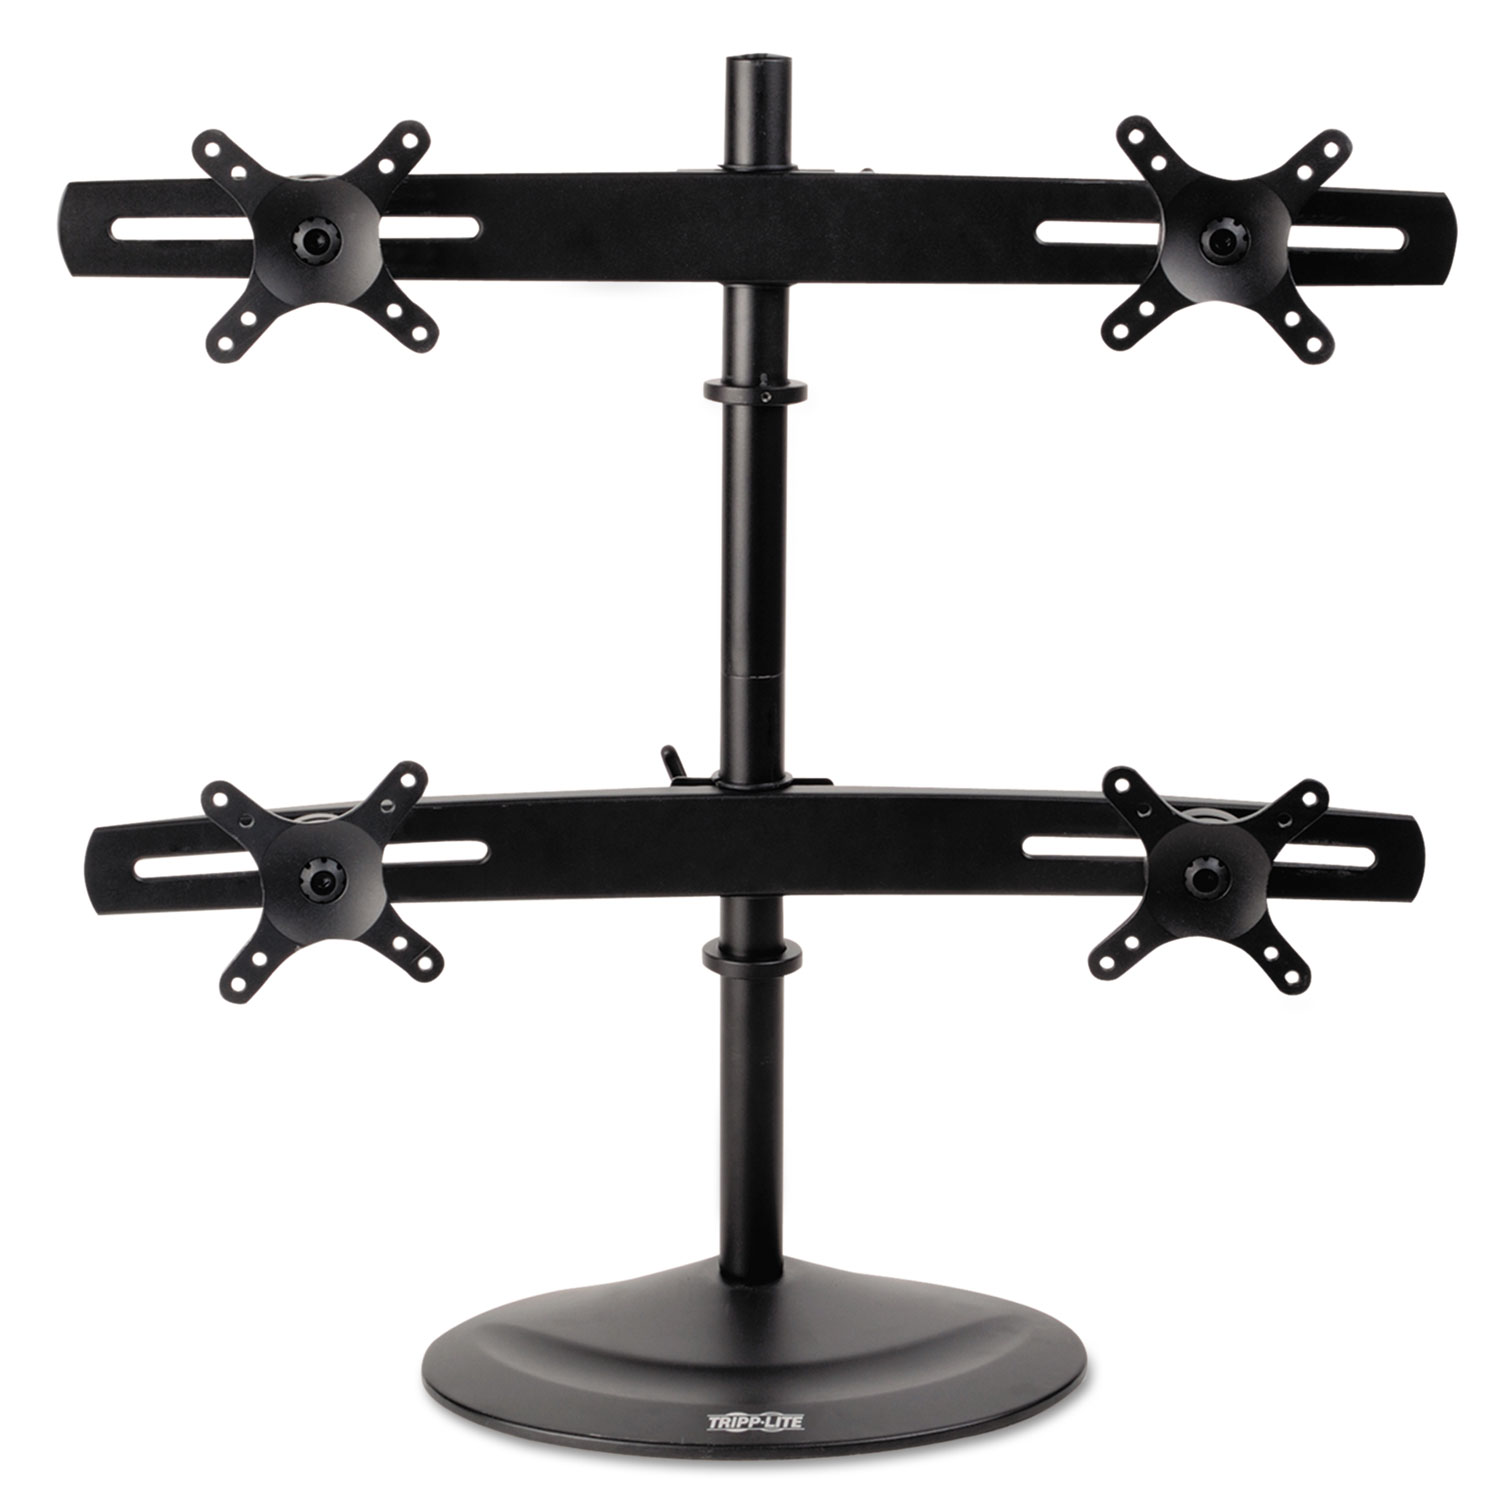 Quad Monitor Mount Stand, Steel/Aluminum, 10 1/4 x 29 x 26, Black